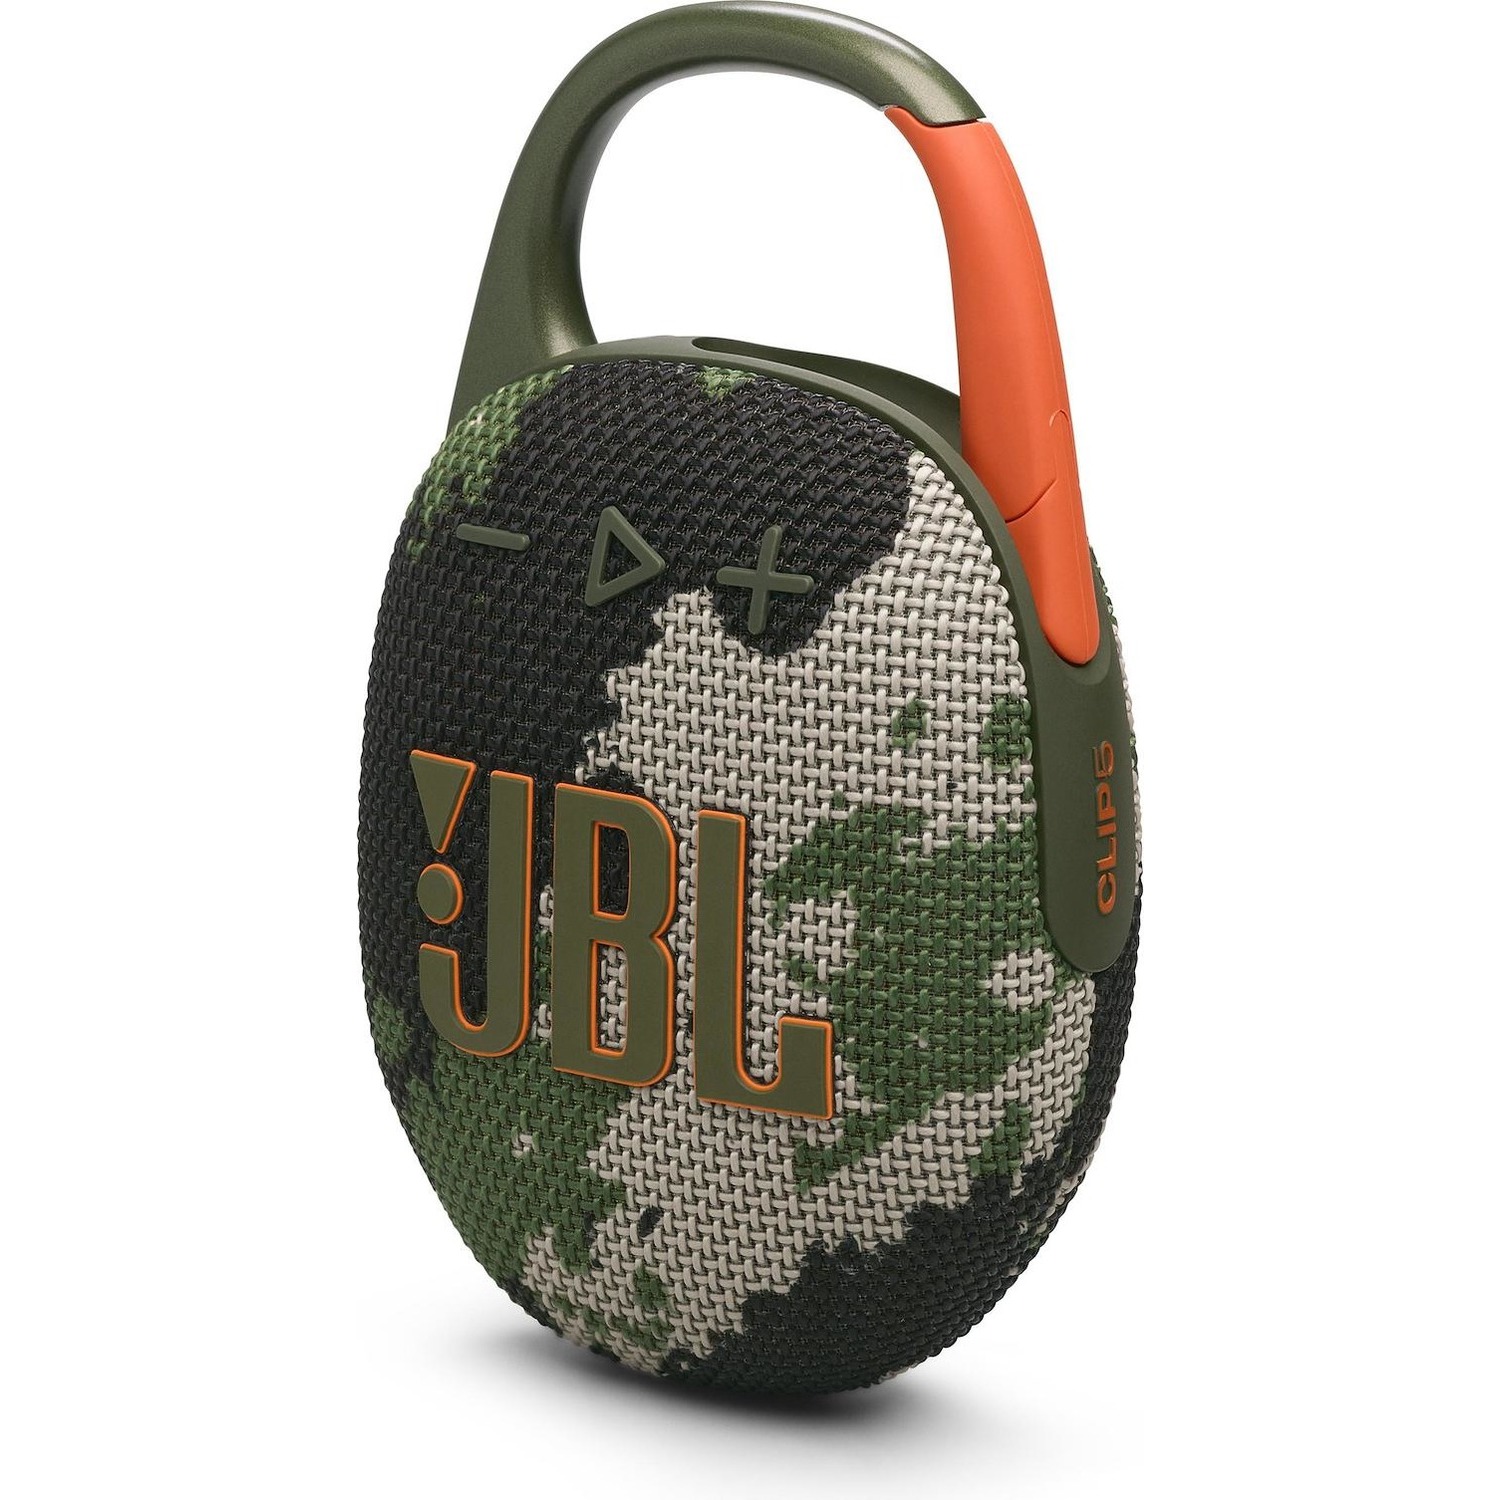 Immagine per Speaker bluetooth JBL CLIP 5 colore camouflage da DIMOStore